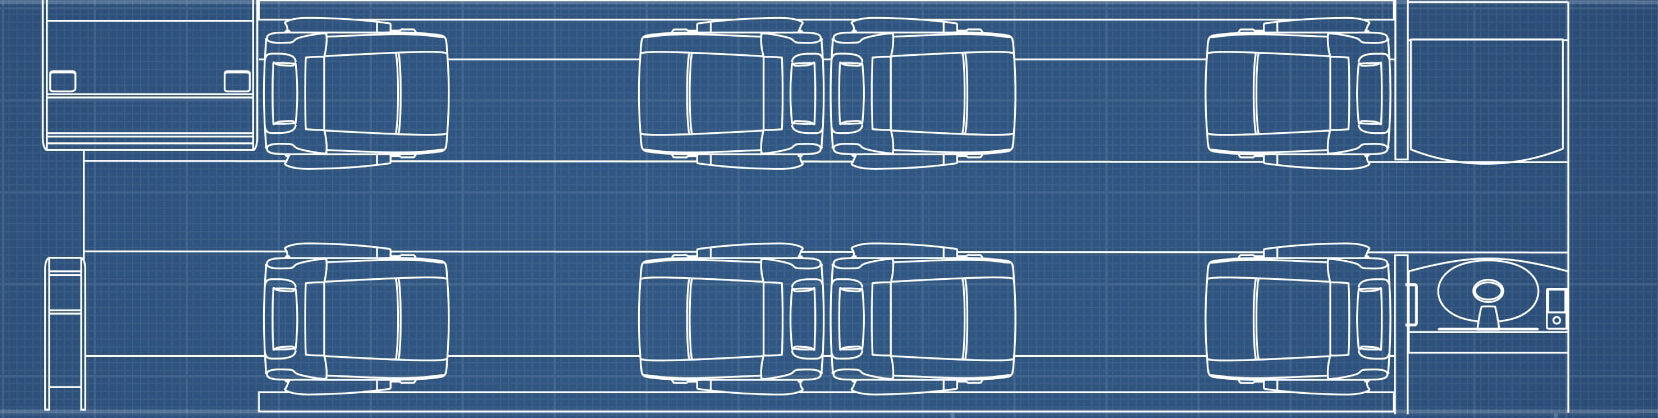 Honda Jet 2600 layout